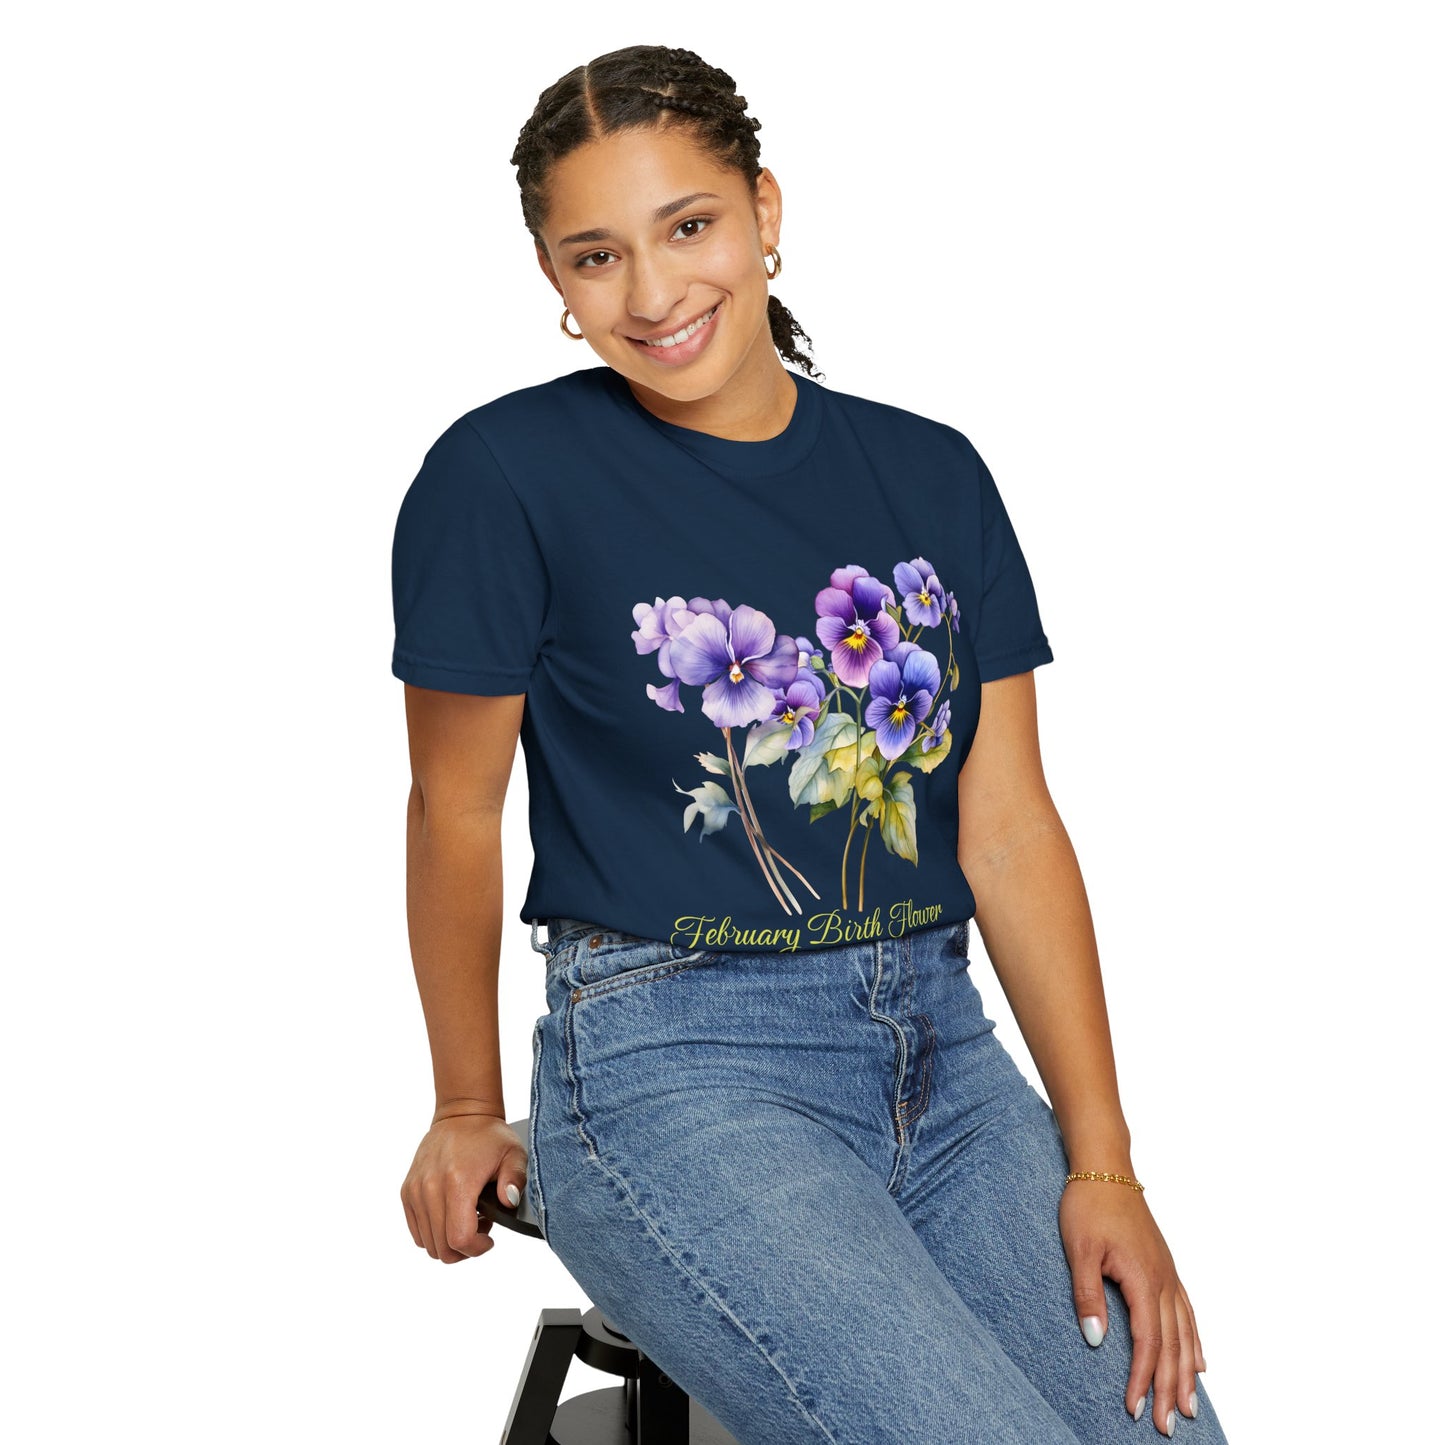 February Birth Flower "Violet" (For Dark Print) - Unisex Garment-Dyed T-shirt